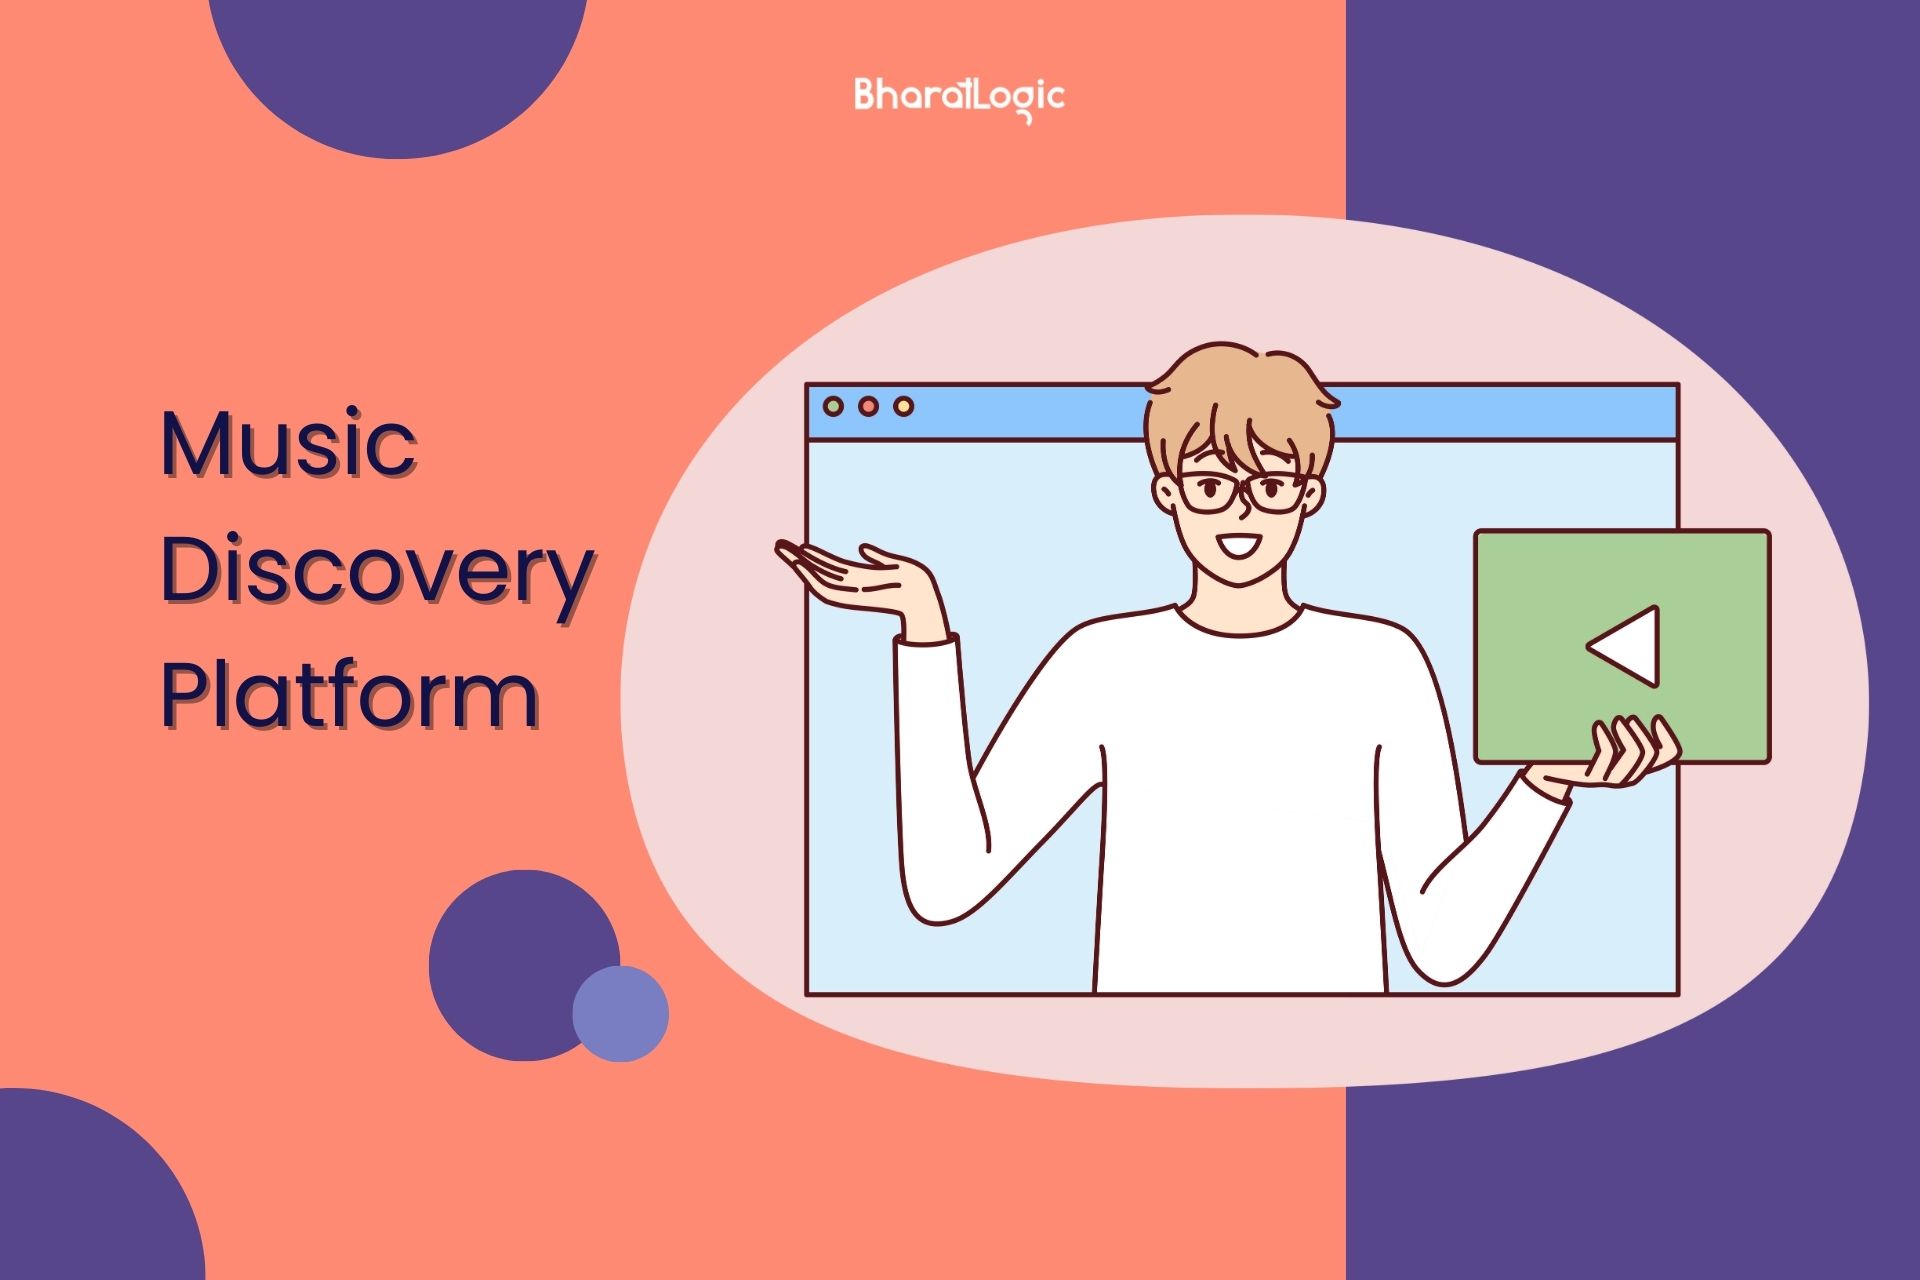 Music Discovery Platform